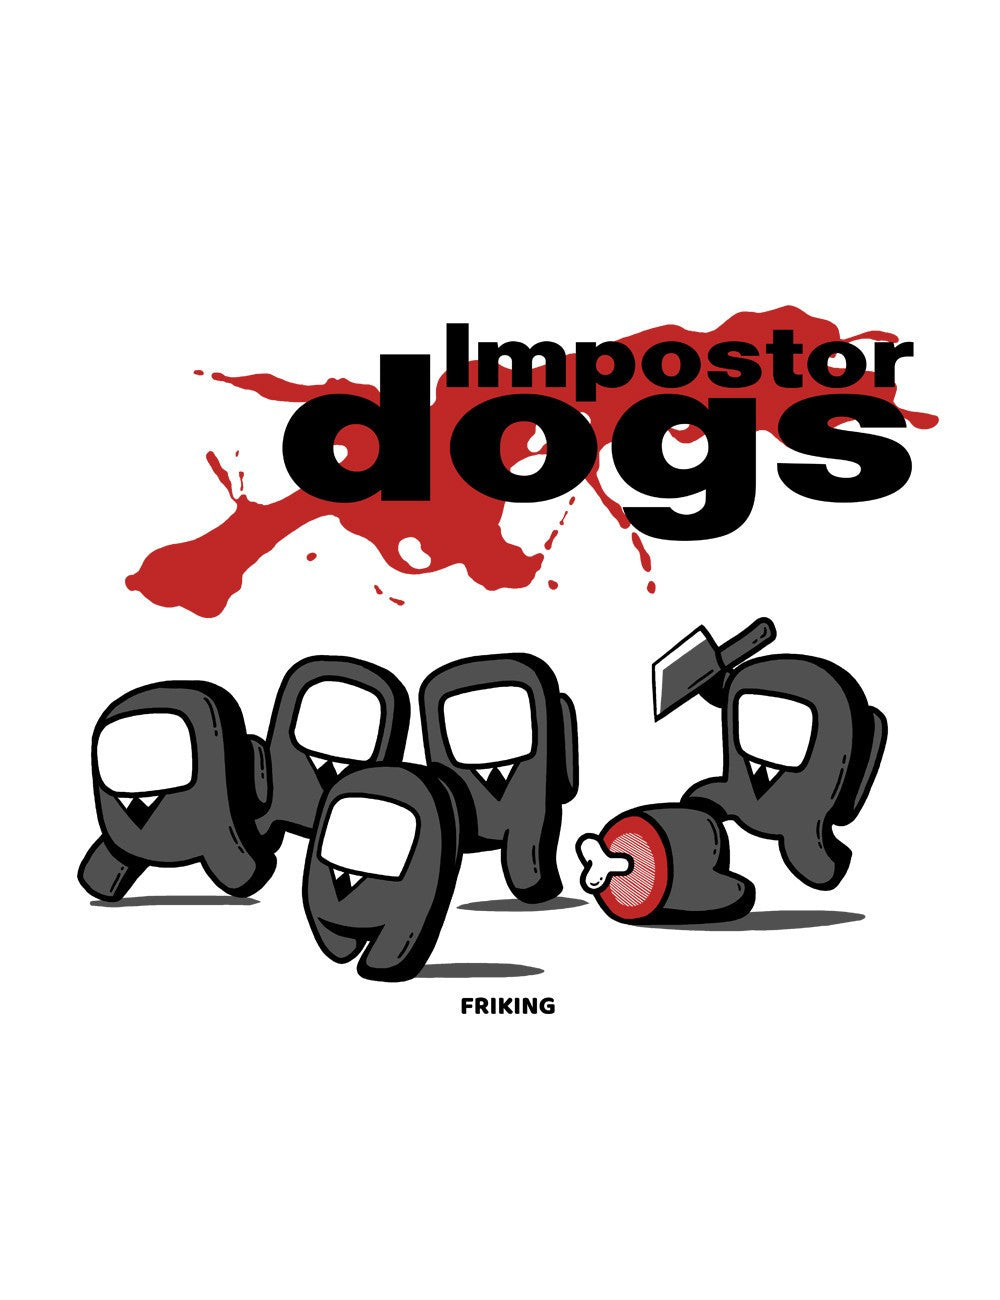  Impostor dogs 